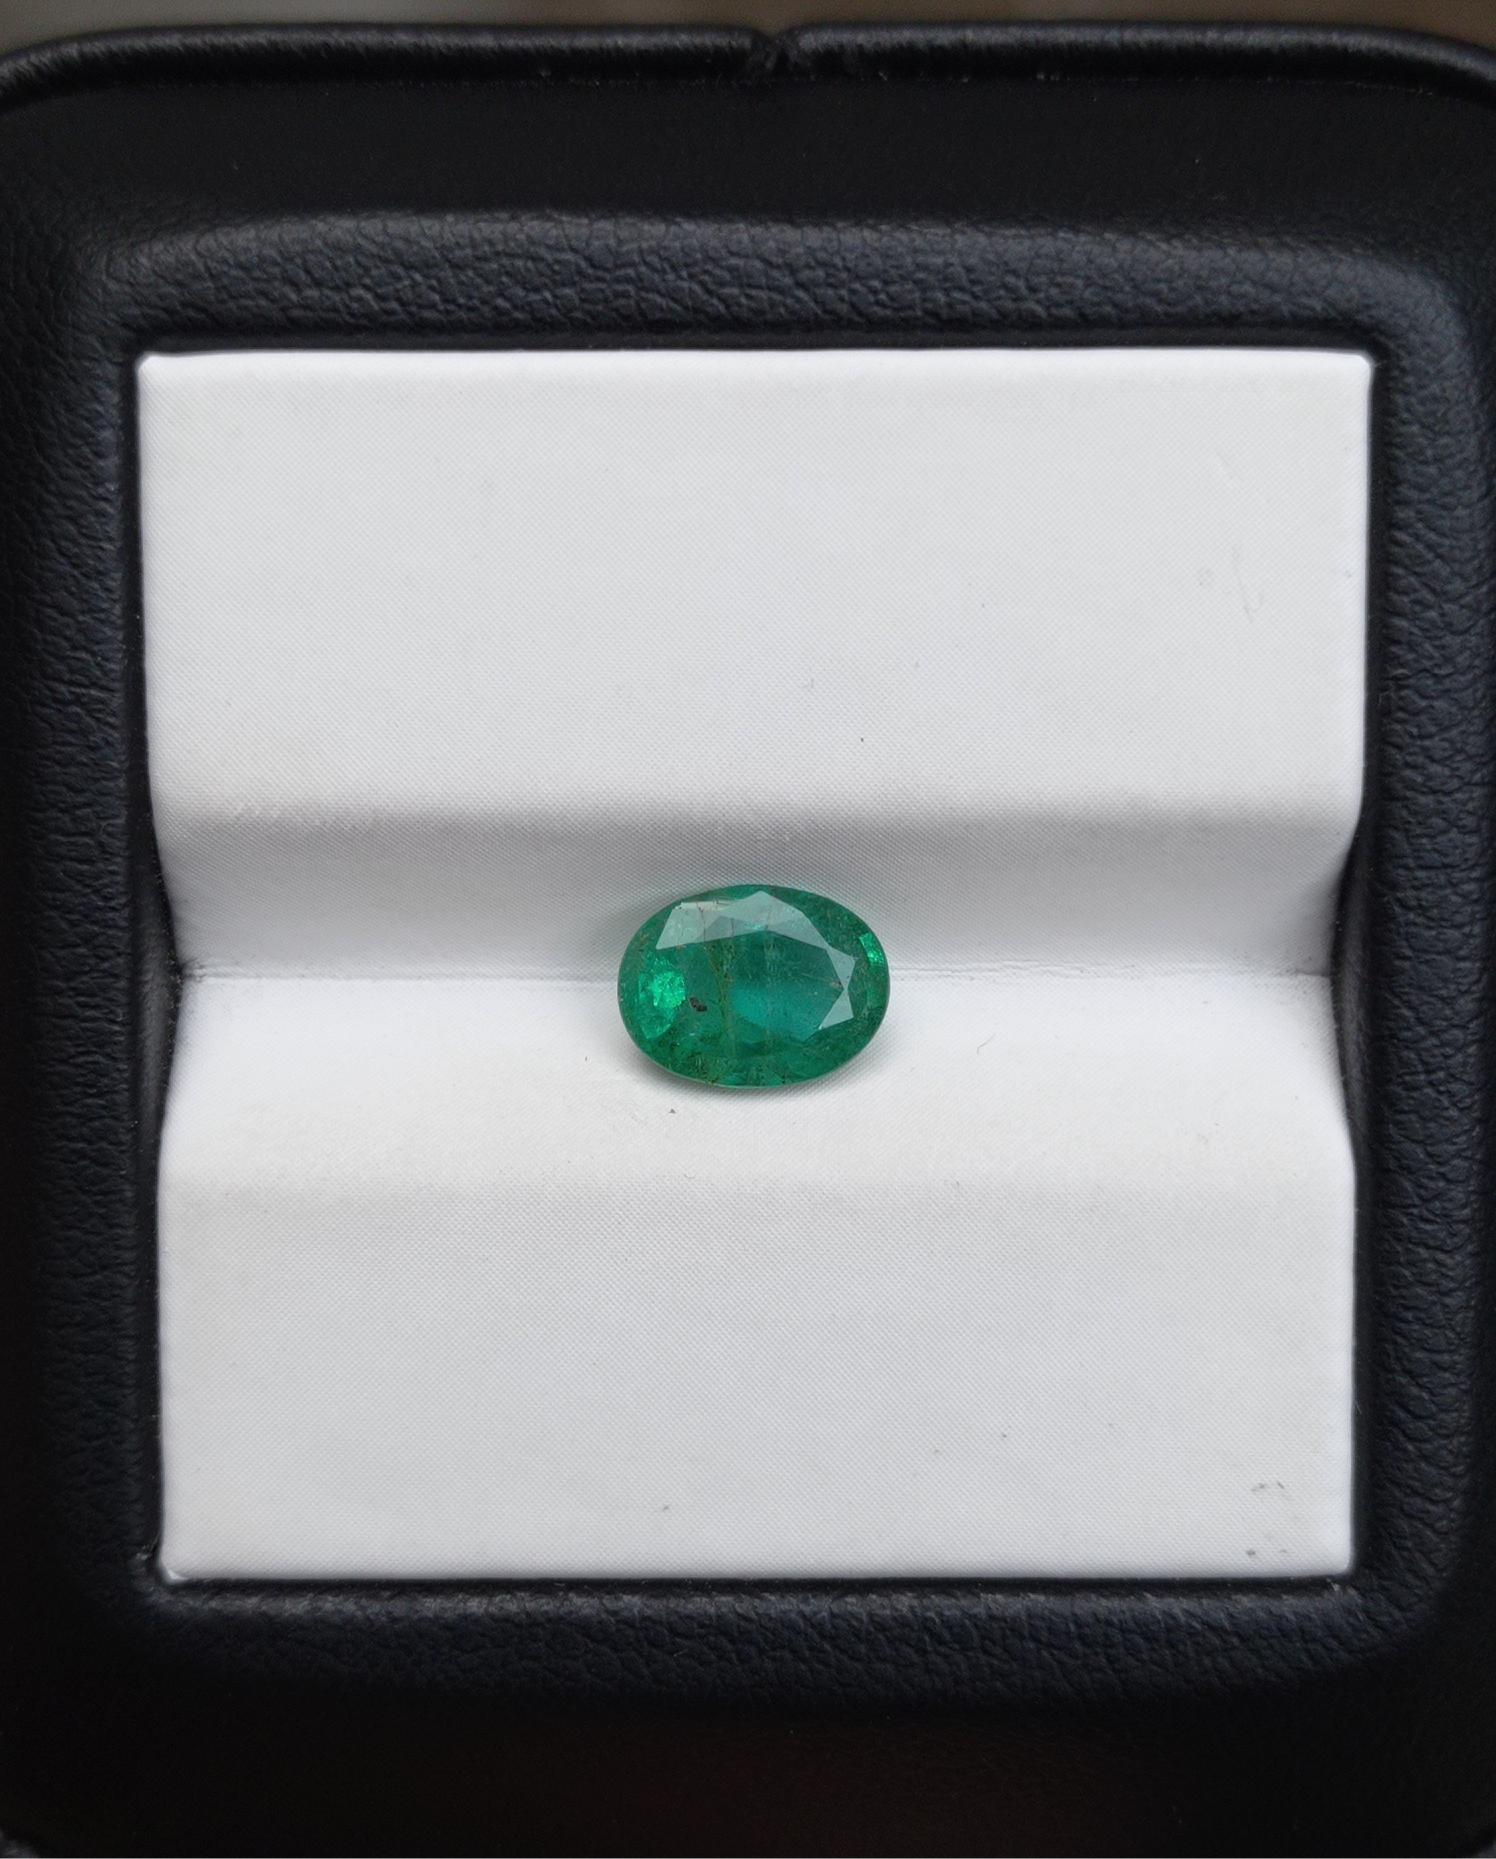 0.90ct Emerald for sale - Budh Ratna - Zamurd - Pachu Stone, Markat Mani Stone - 8x6x4mm